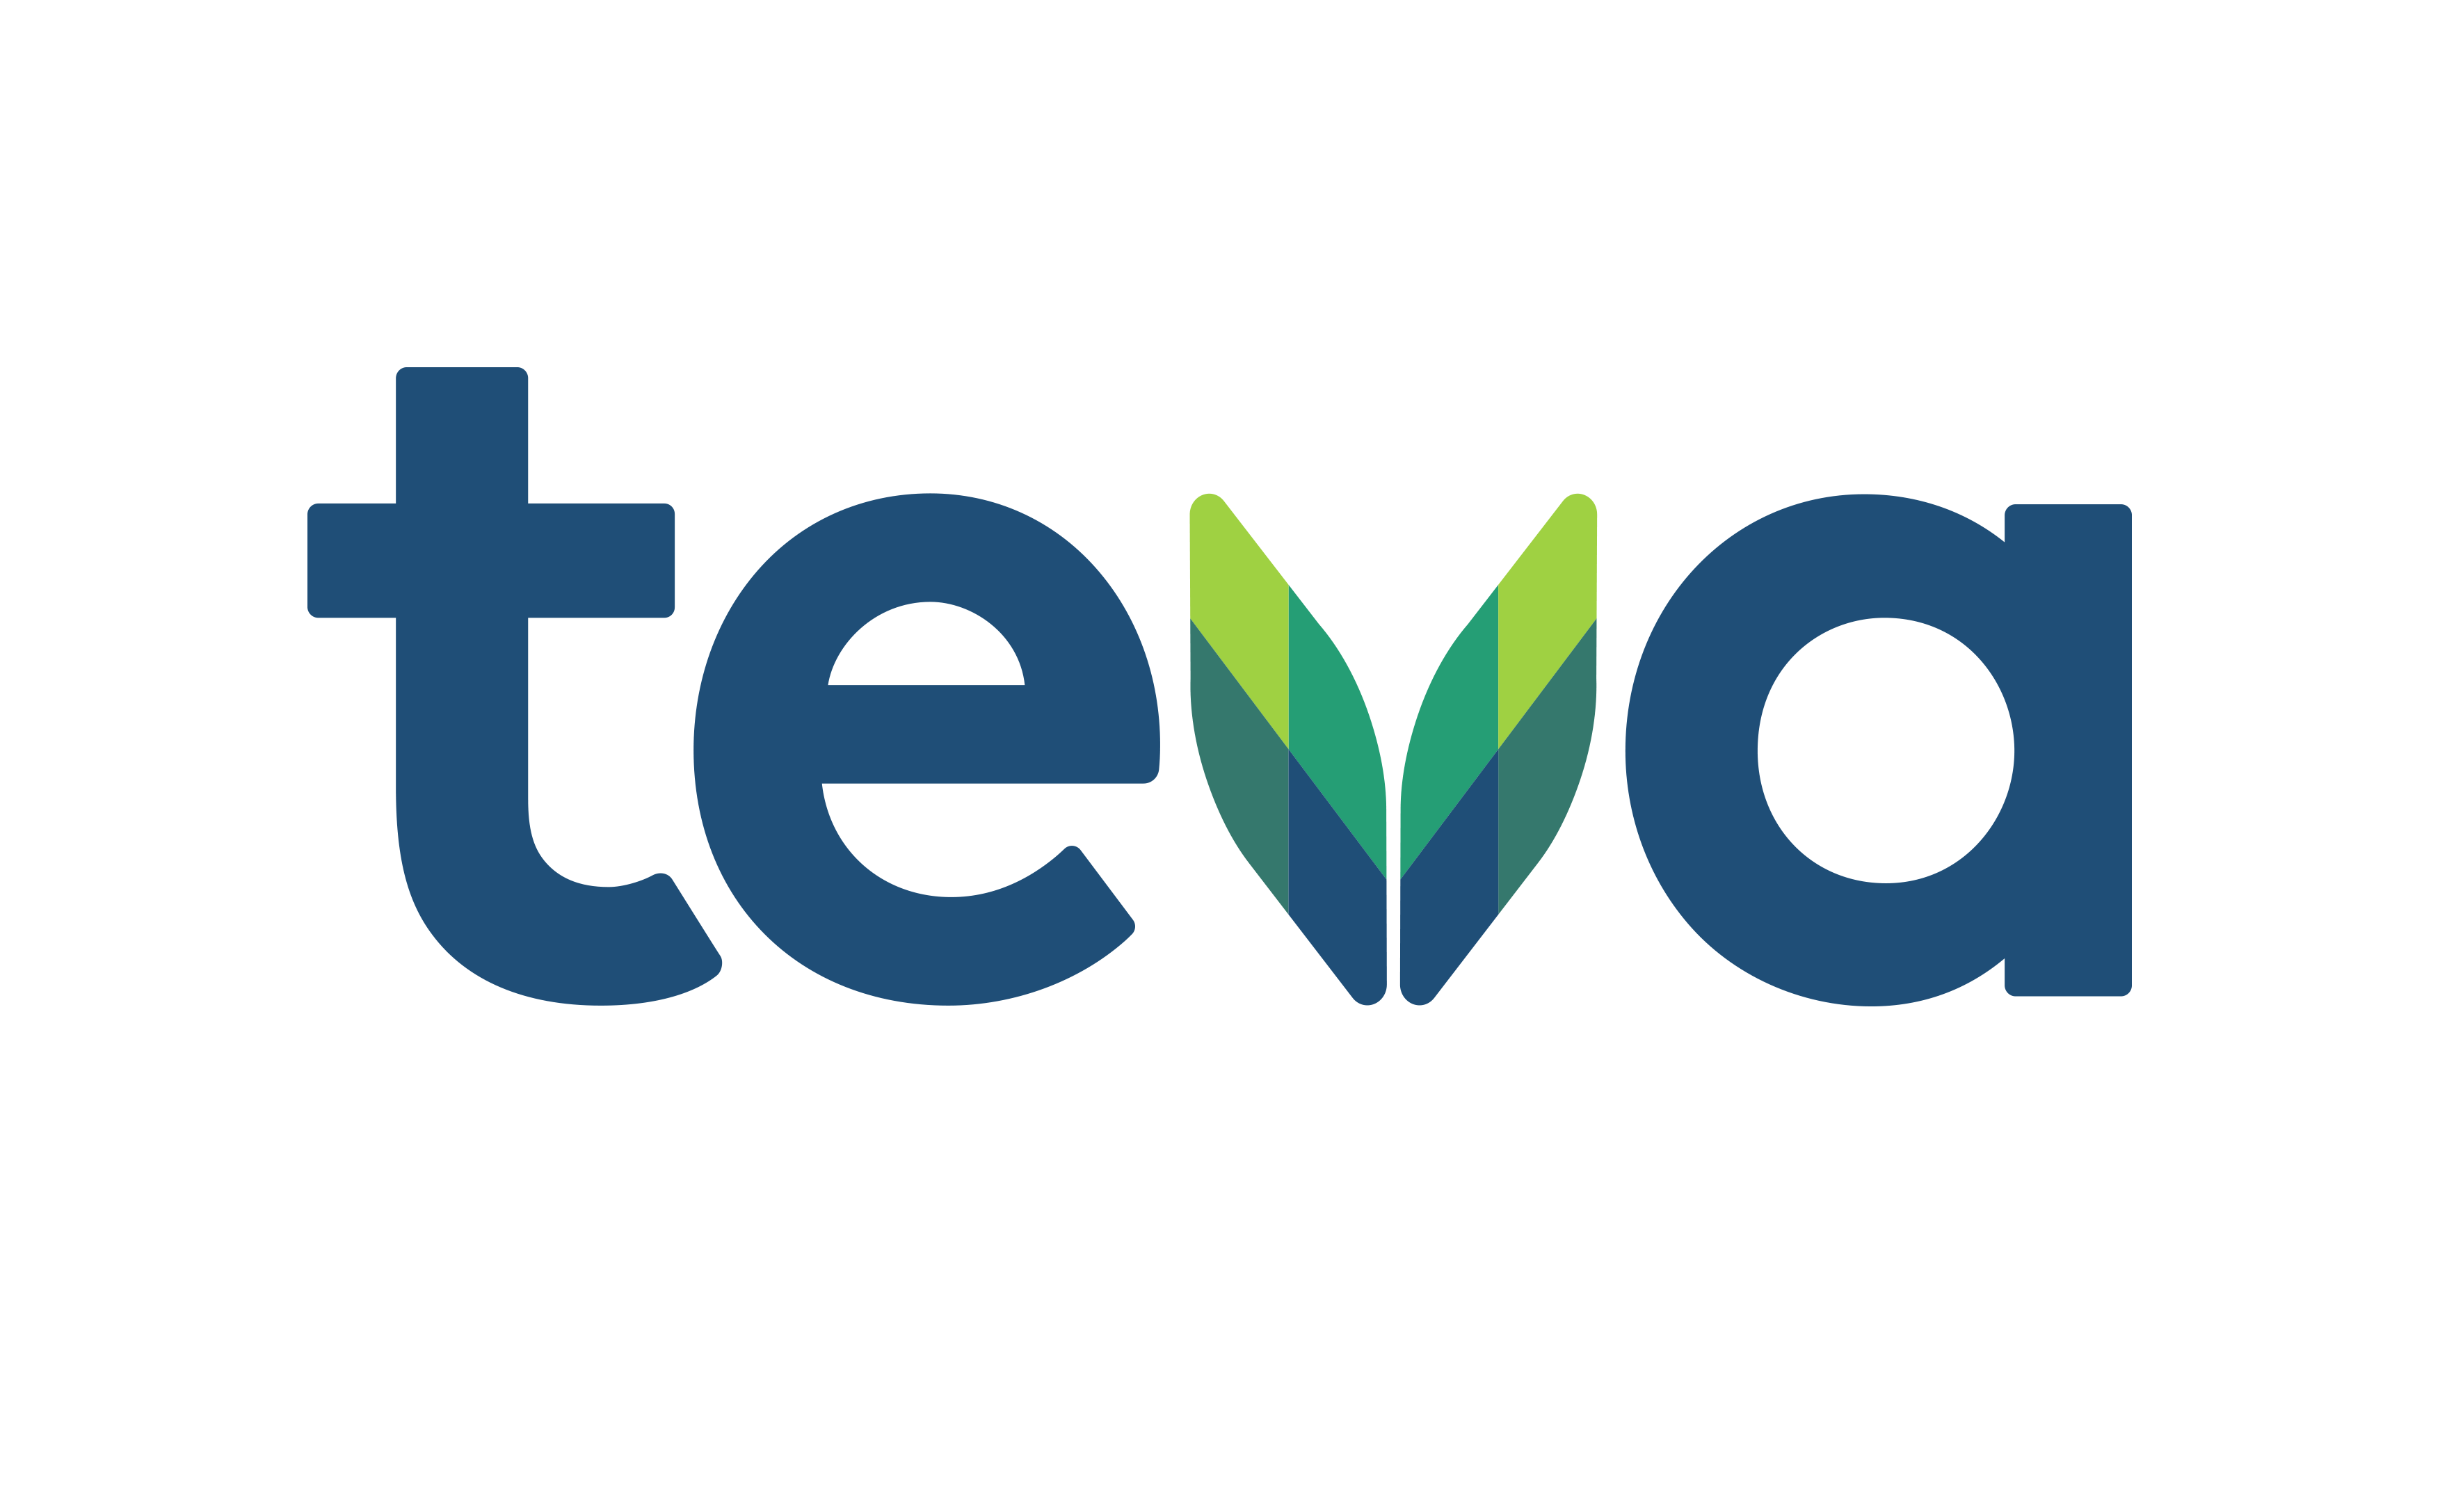 Teva Logo - Teva Pharmaceutical Industries